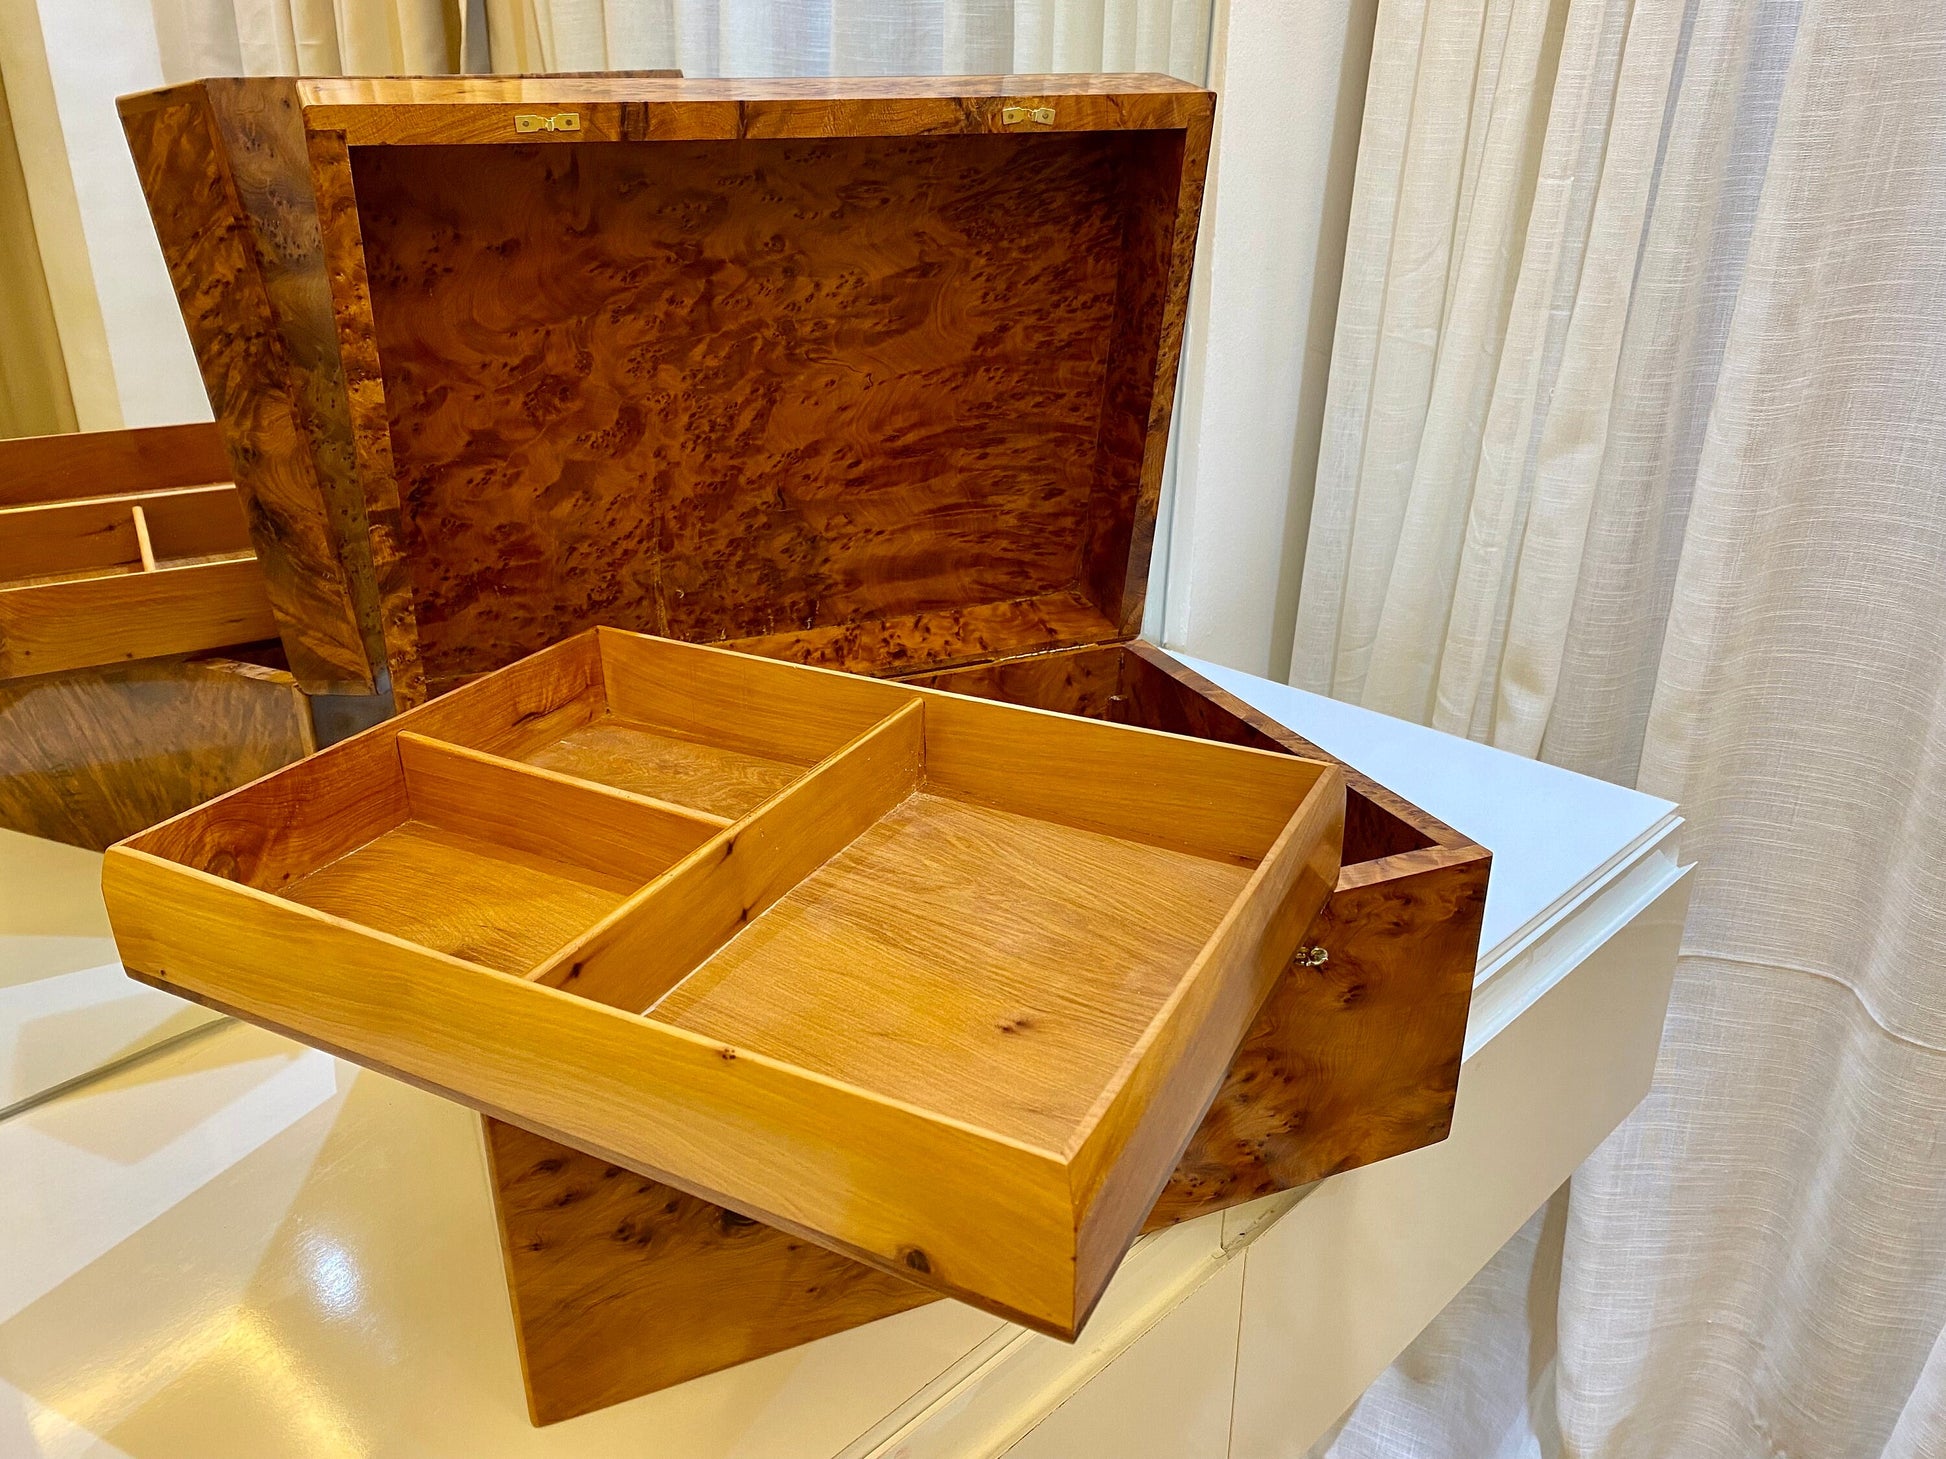 15.9"x11.8" Big Moroccan Storage burl thuya Box,lockable wooden burl Jewelry Box organizer with key,keepsake couples gift,wedding memory box